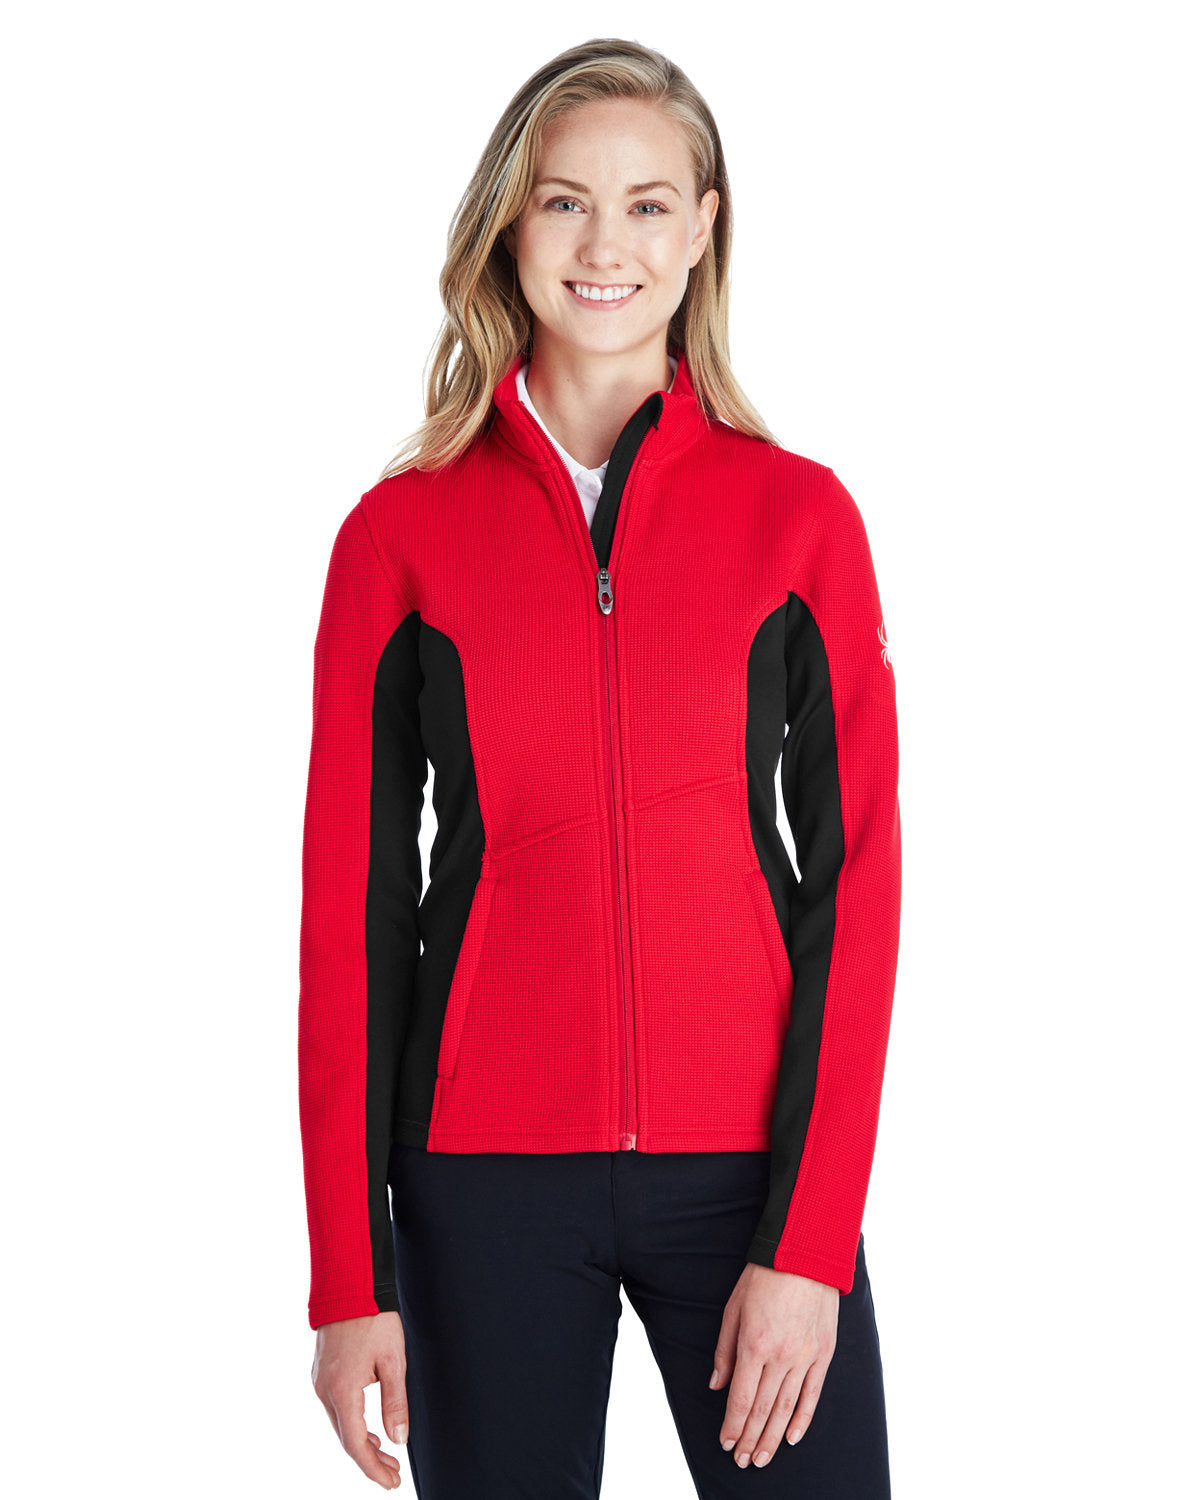 Branded Spyder Ladies Constant Full Zip Sweater Red/Black/Wht